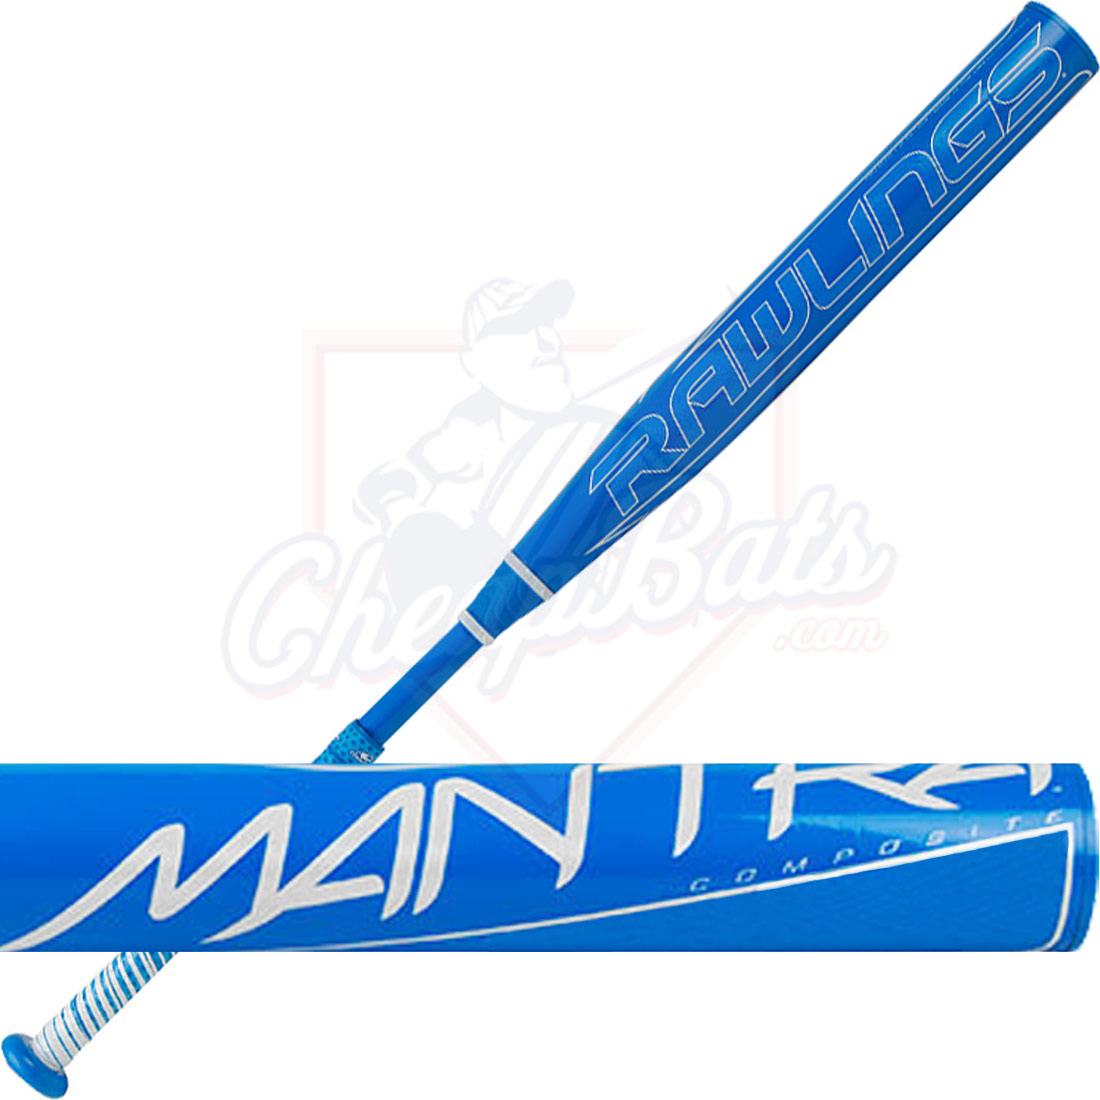 2021 Rawlings Mantra Fastpitch Softball Bat -9oz FP1M9